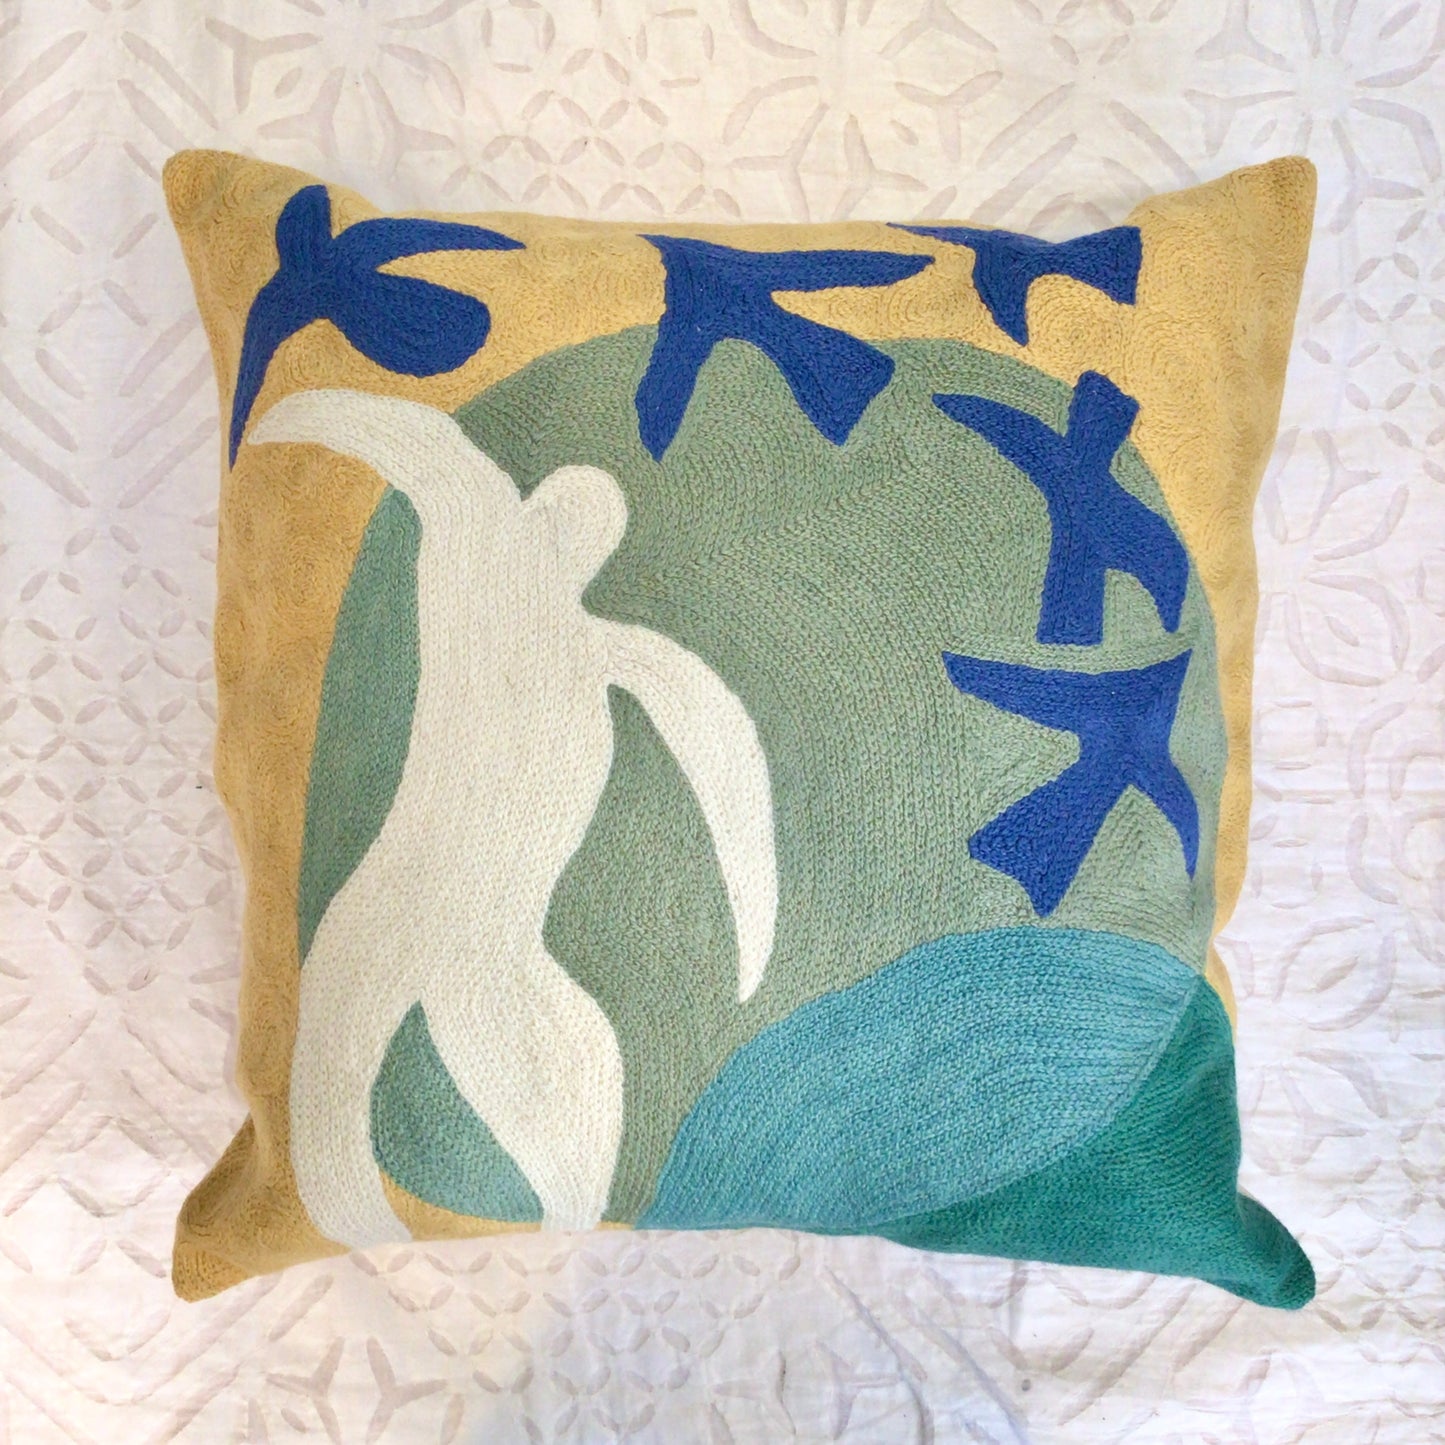 Matisse Man and Bird Chainstitch Pillow